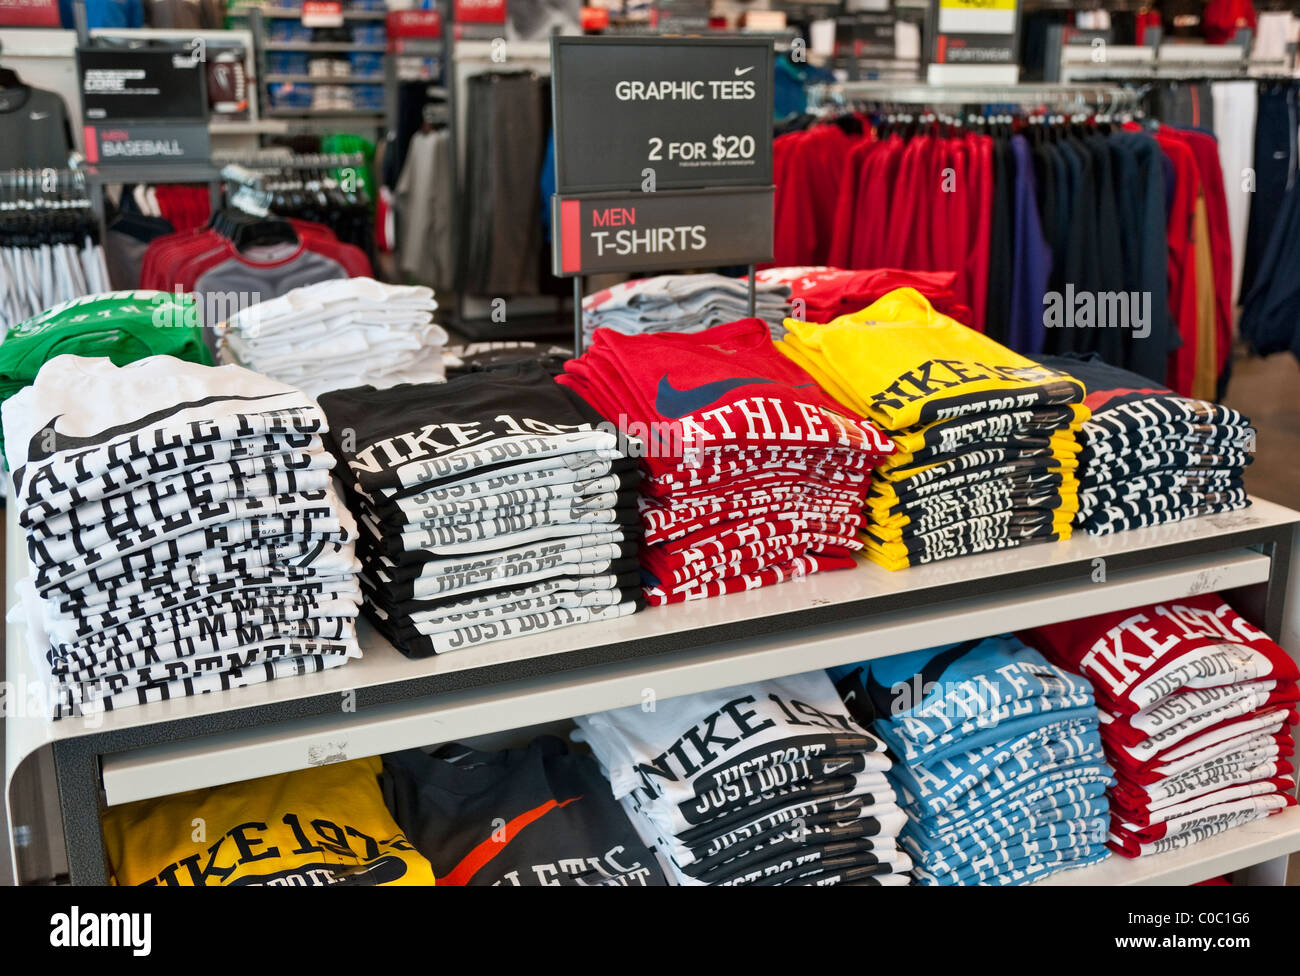 Nike store shopping -Fotos und -Bildmaterial in hoher Auflösung – Alamy